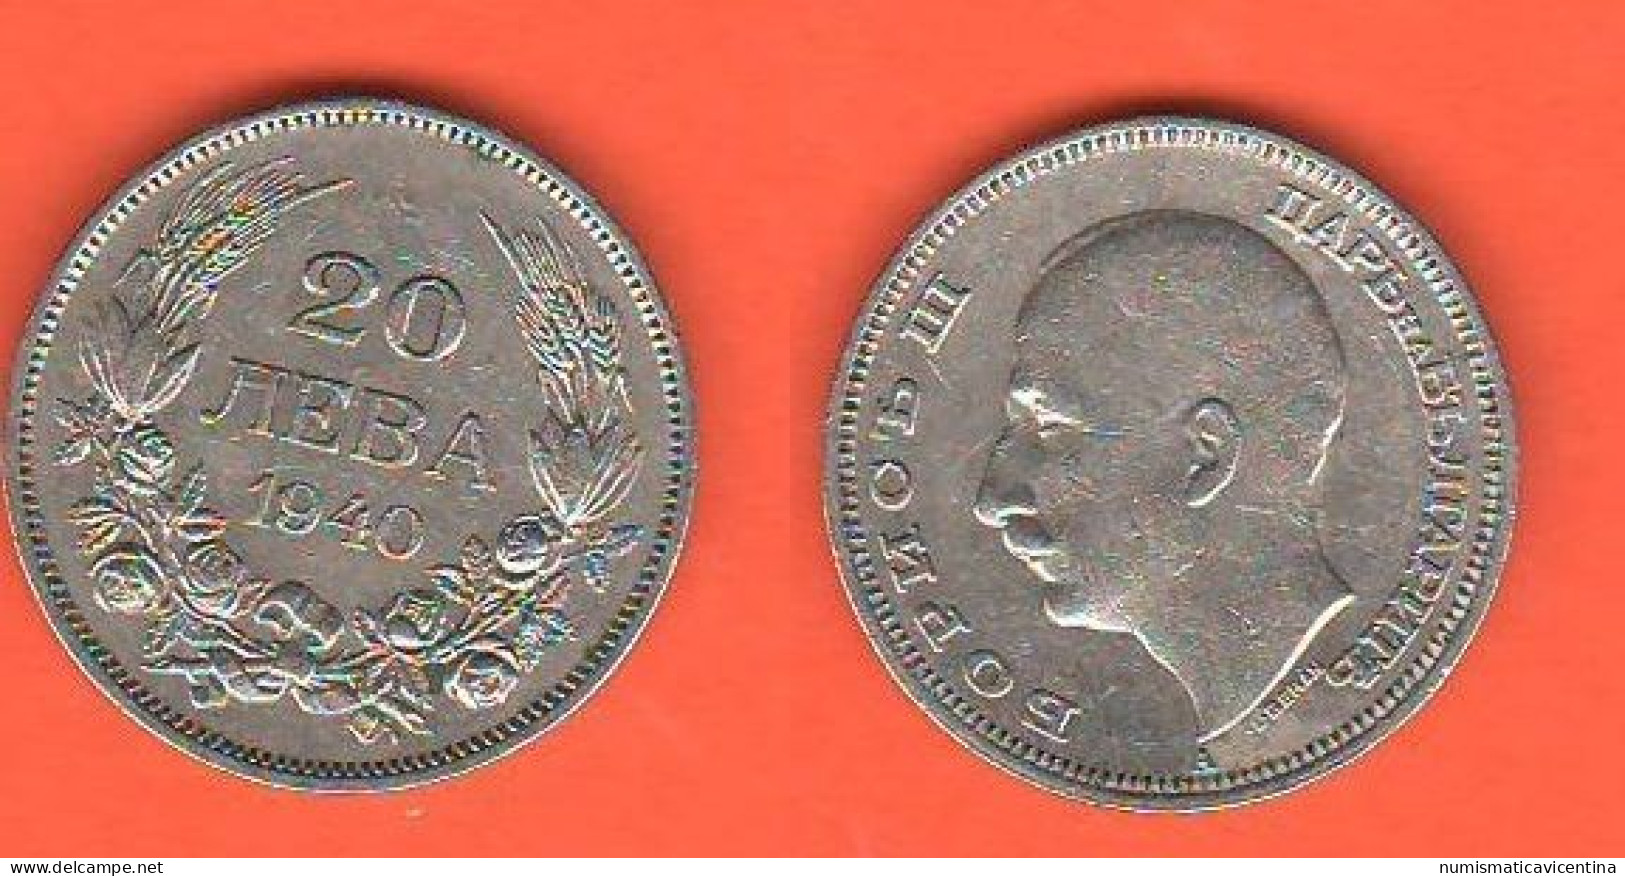 Bulgarie 20 Leva 1940 Bulgaria България 20 лева Nickel Typological Coin King Boris III° - Bulgarien